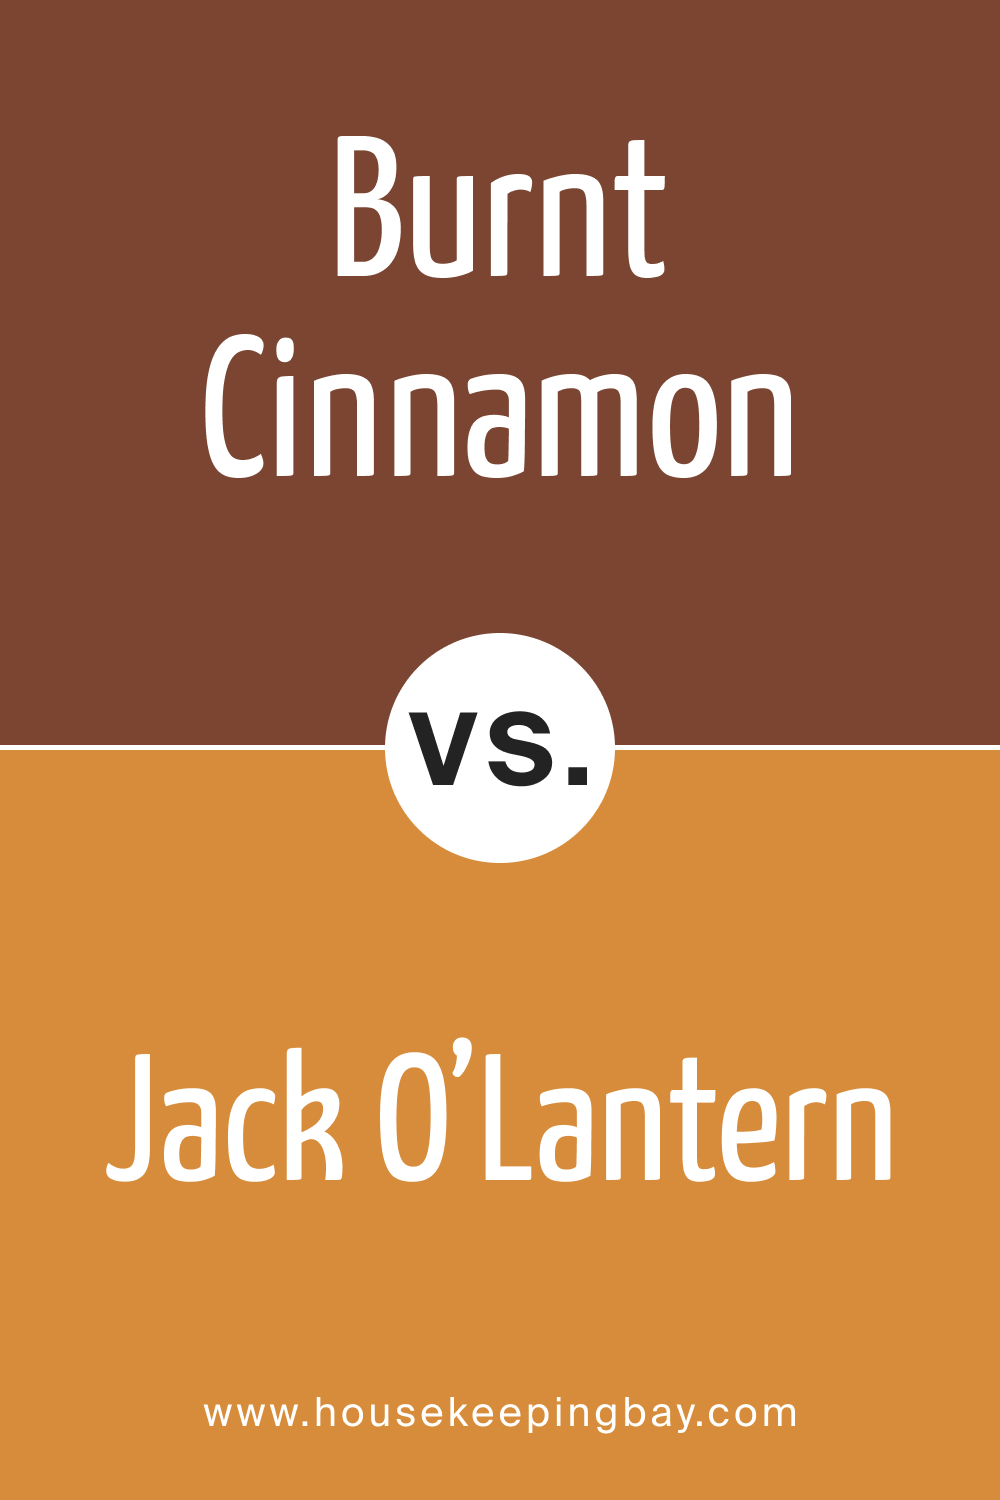 BM Burnt Cinnamon 2094-10 vs. BM 2156-30 Jack O’Lantern